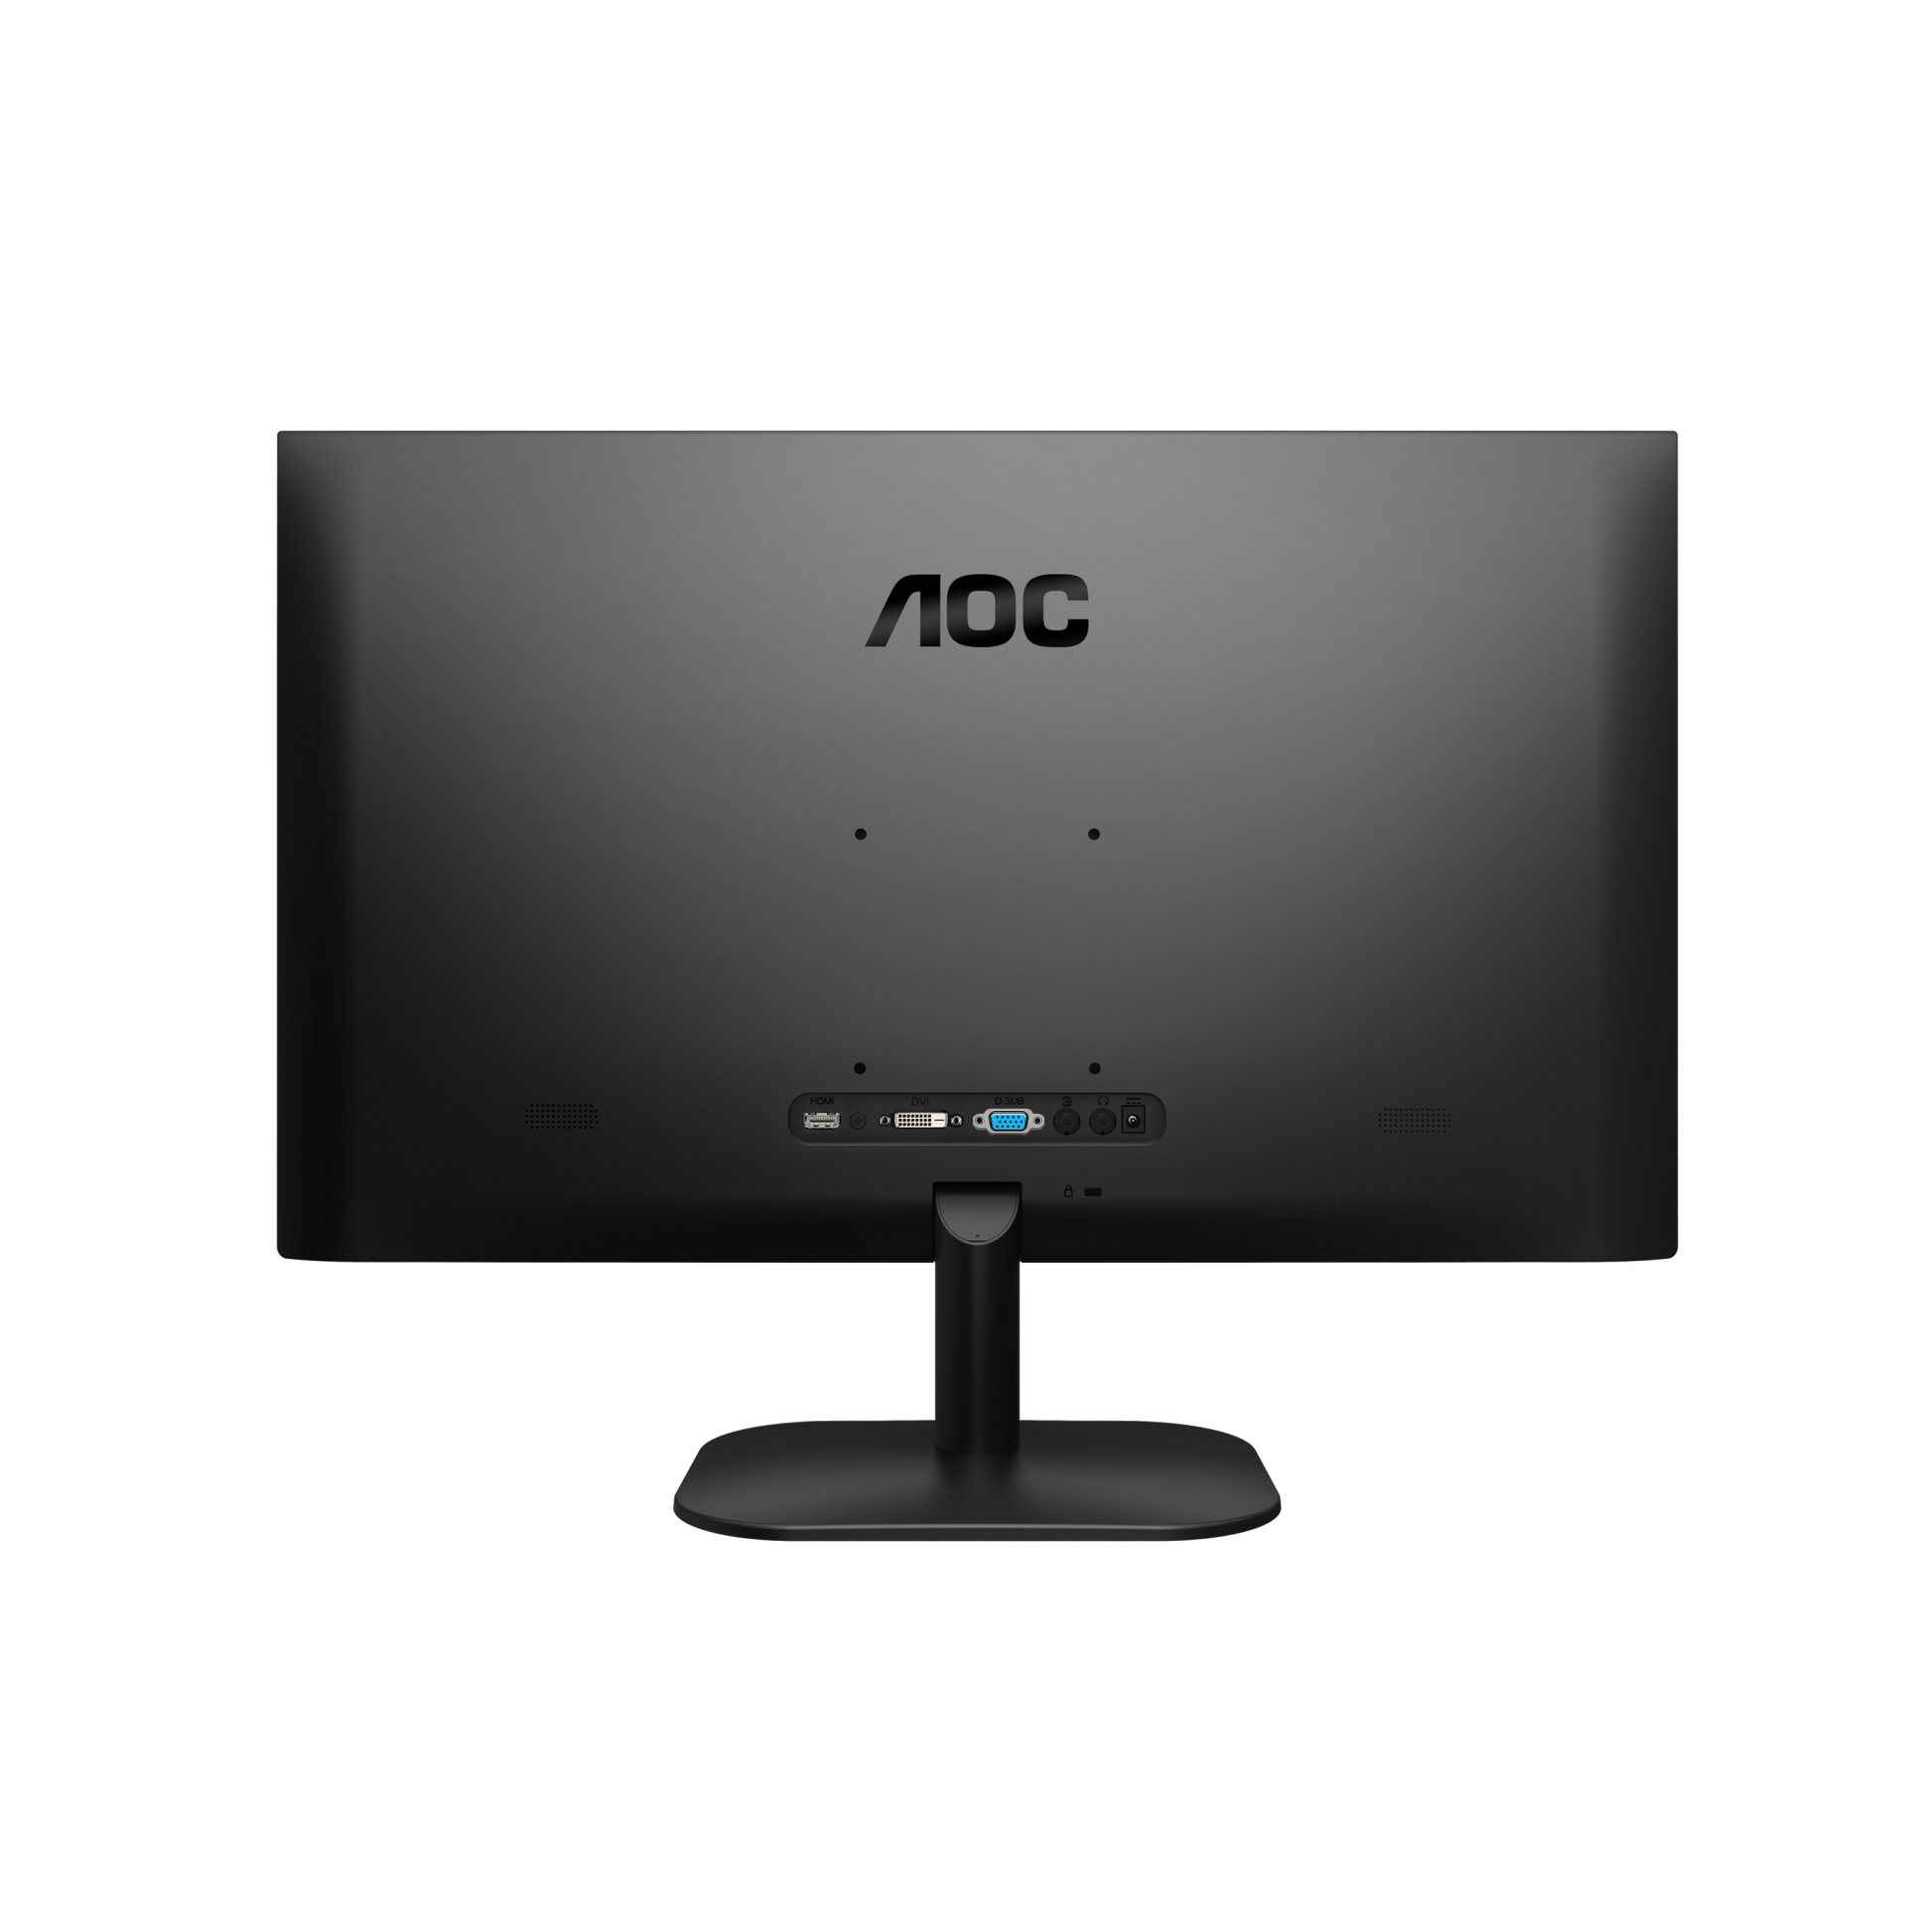 AOC 23.8 inch IPS Monitor